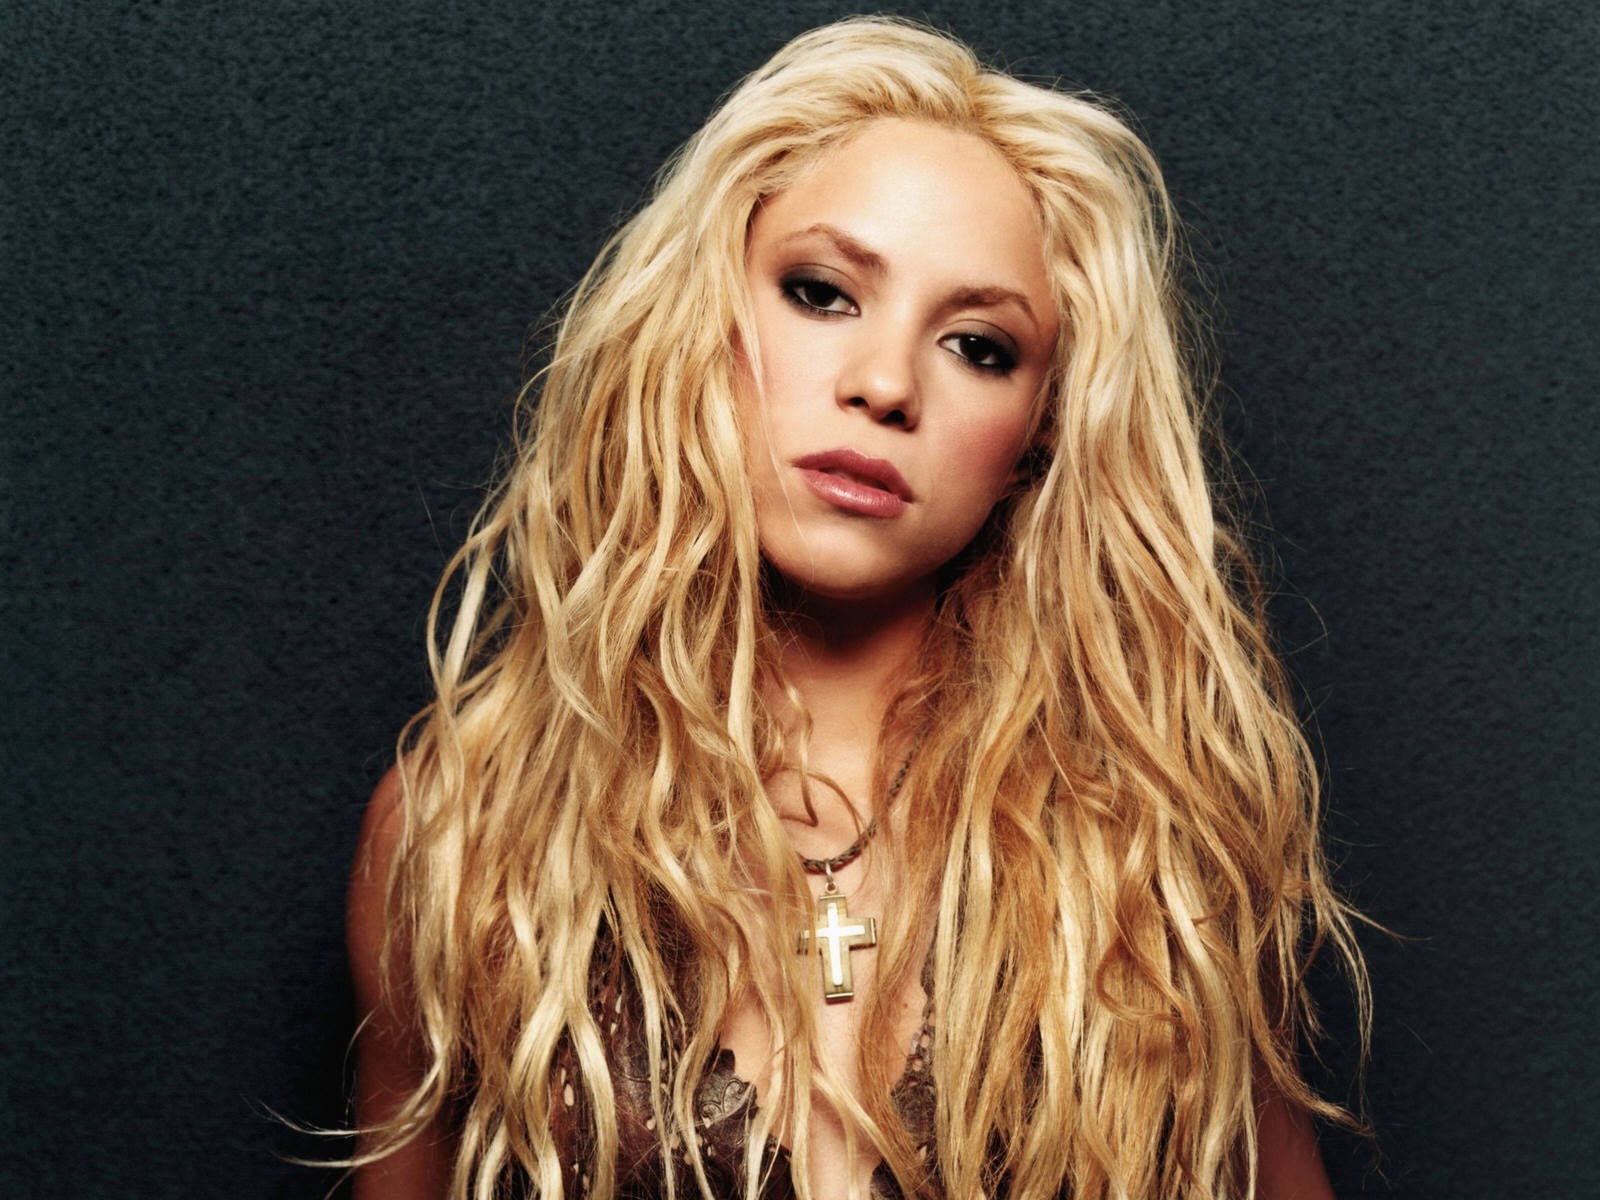 Shakira Hot Colombian Singer And Dancer HD Wallpaper 20151600 x 1200